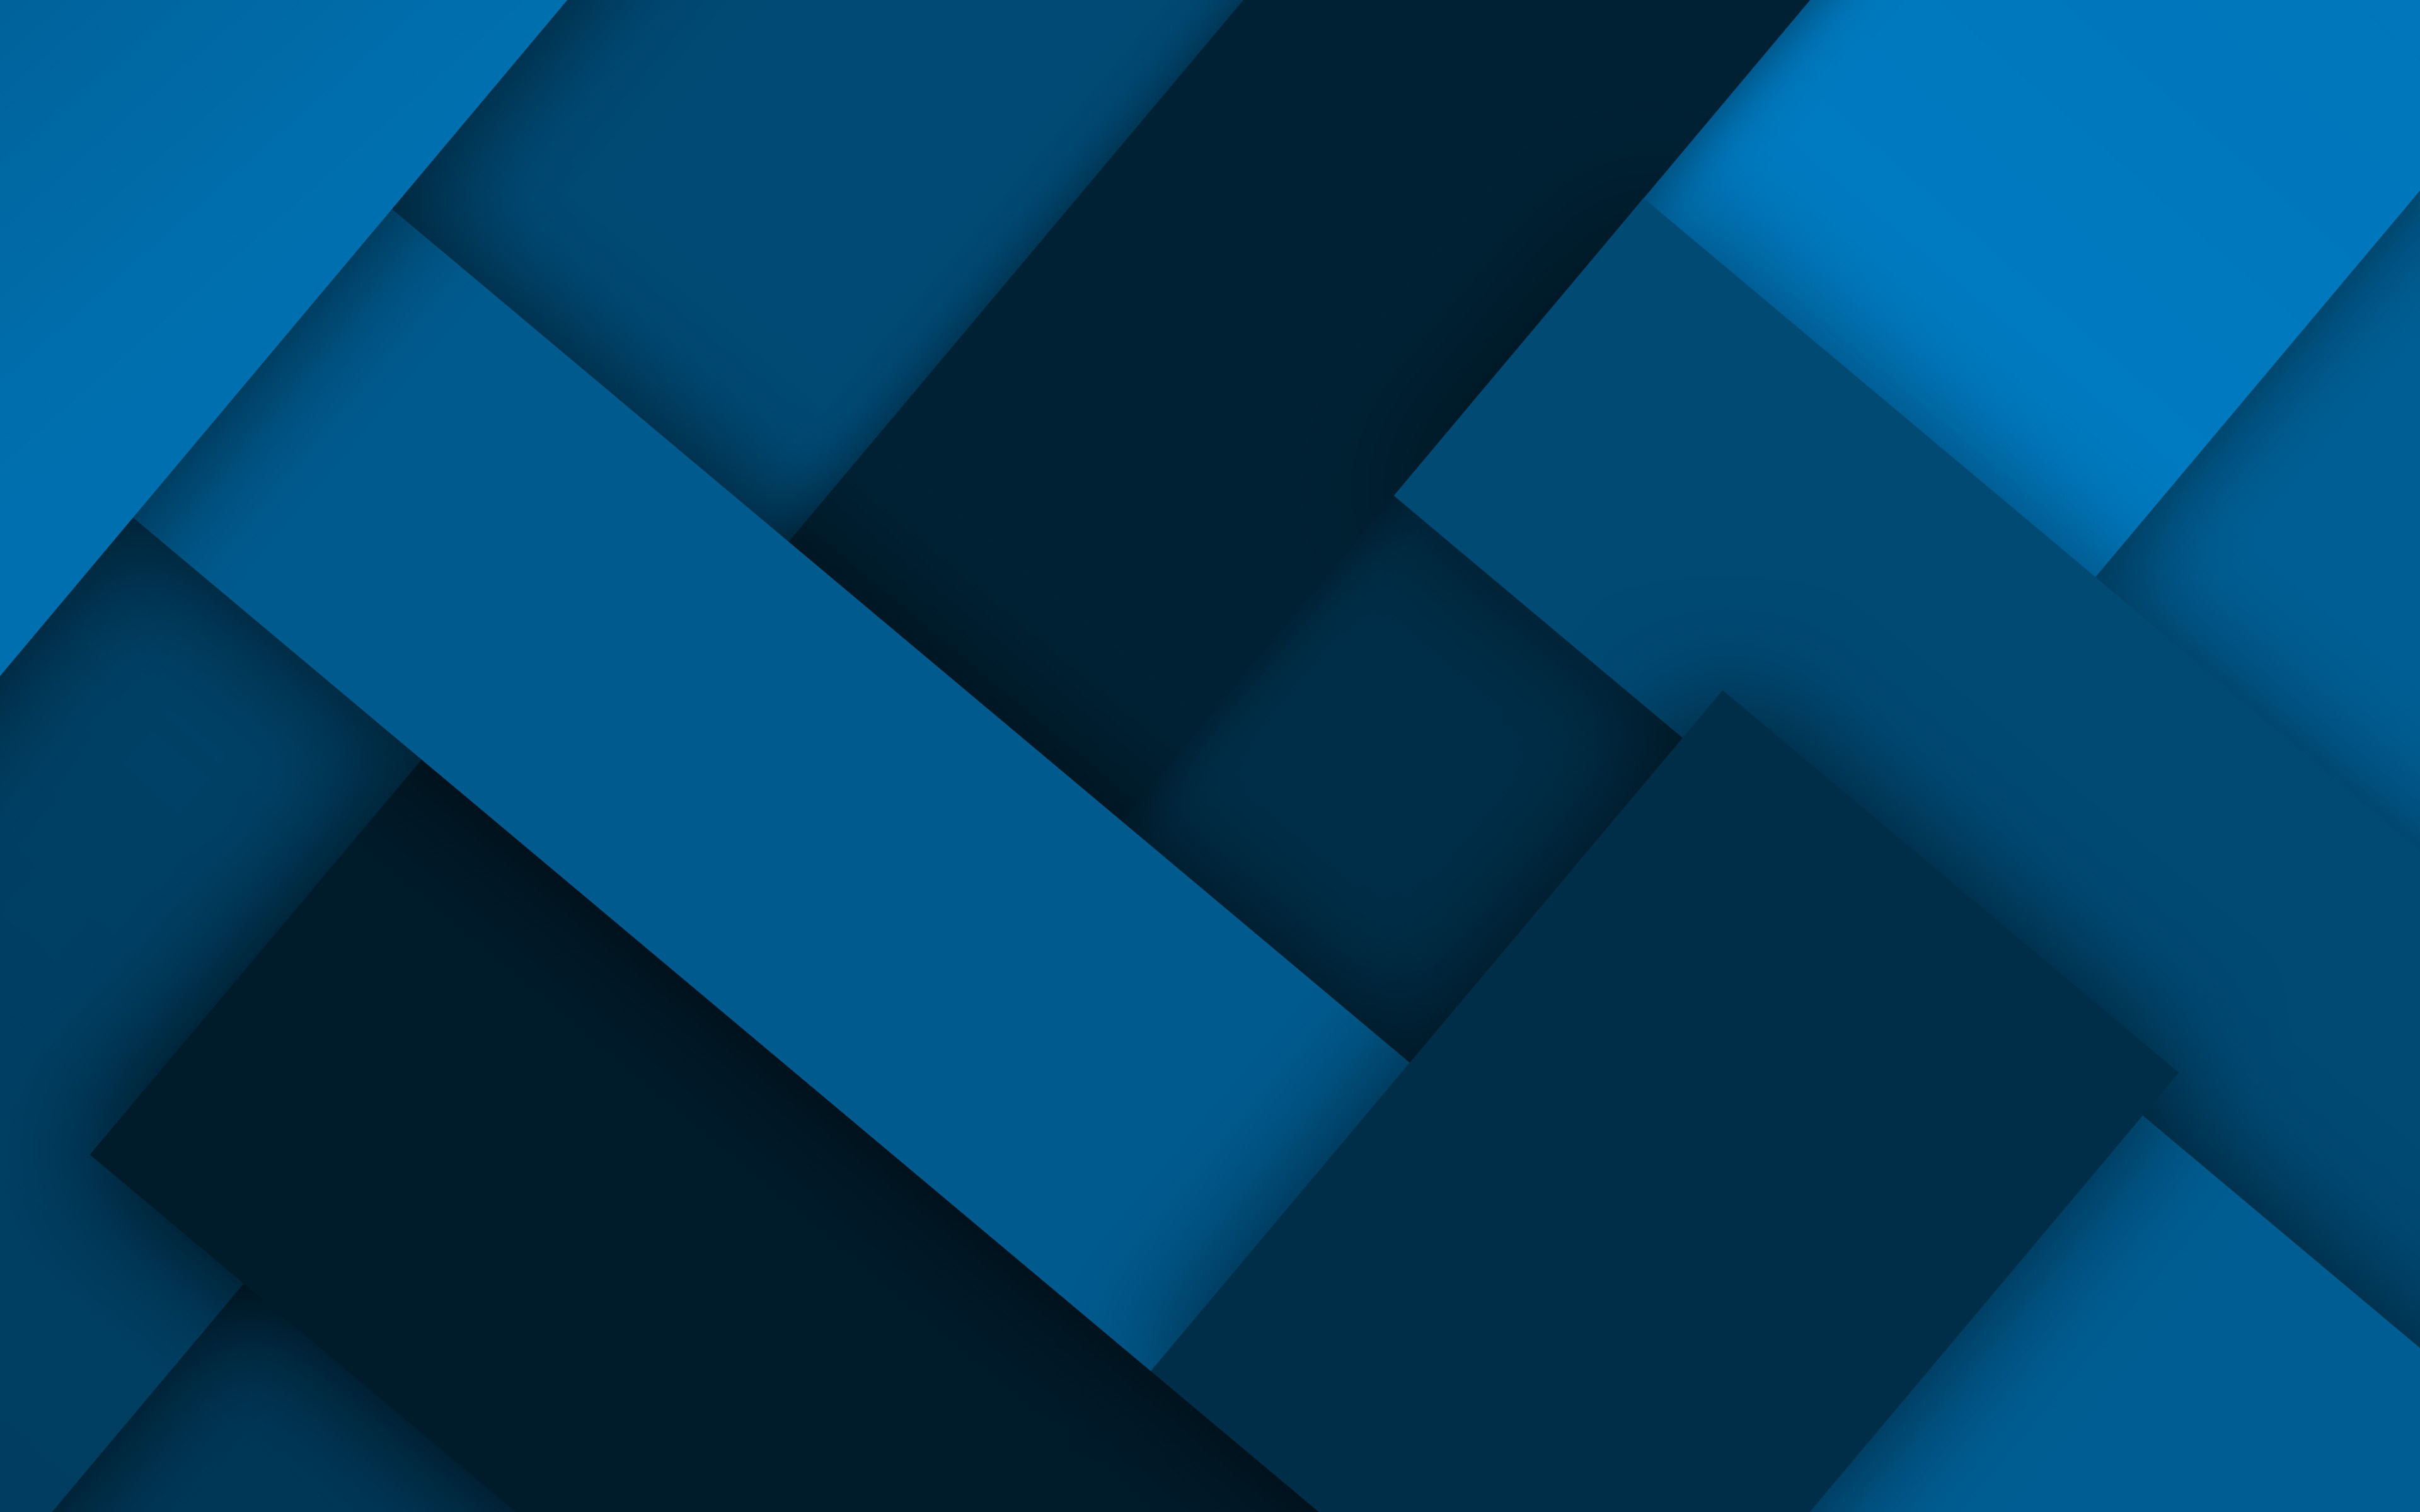 Blue Lines, 4k, Material Design, Creative, Geometric - High Resolution Material Design - HD Wallpaper 